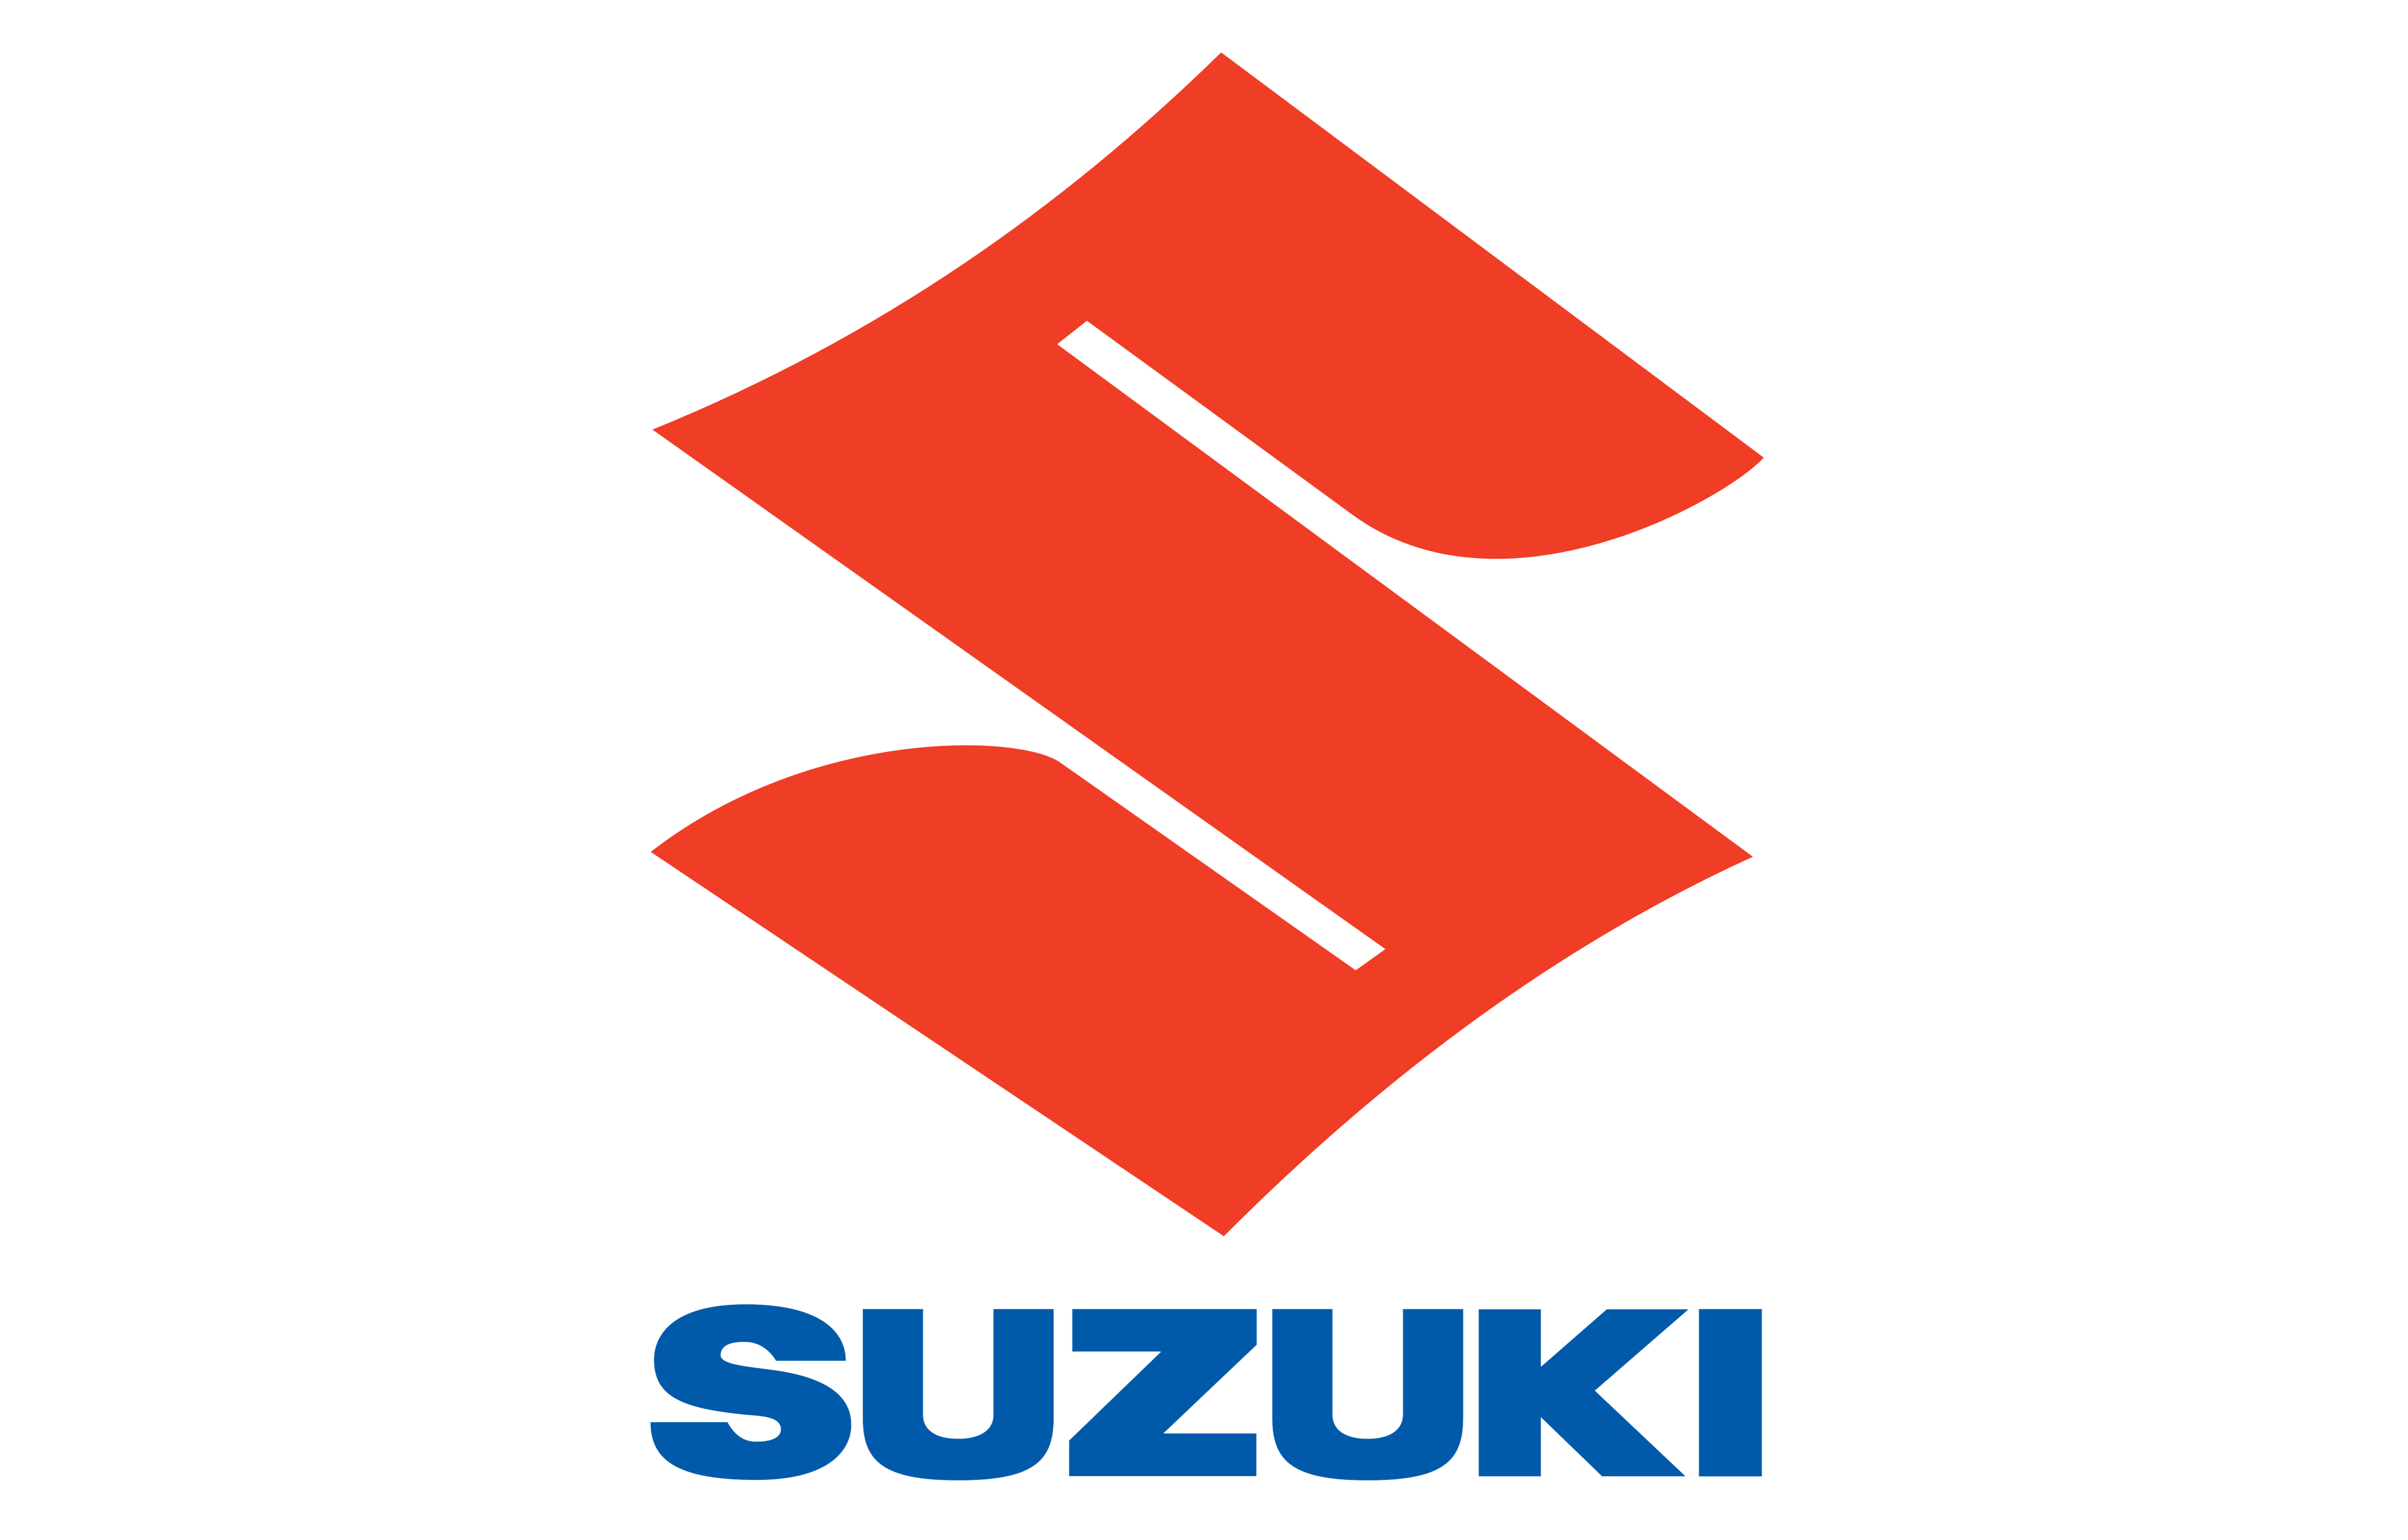 Swift 3d Letters (Logo stickers emblems ) for Suzuki Swift Bonnet or Dickey  + SUZUKI Sticker for C Pillar BLACK + RED COLOR – Set of 3 Stickers